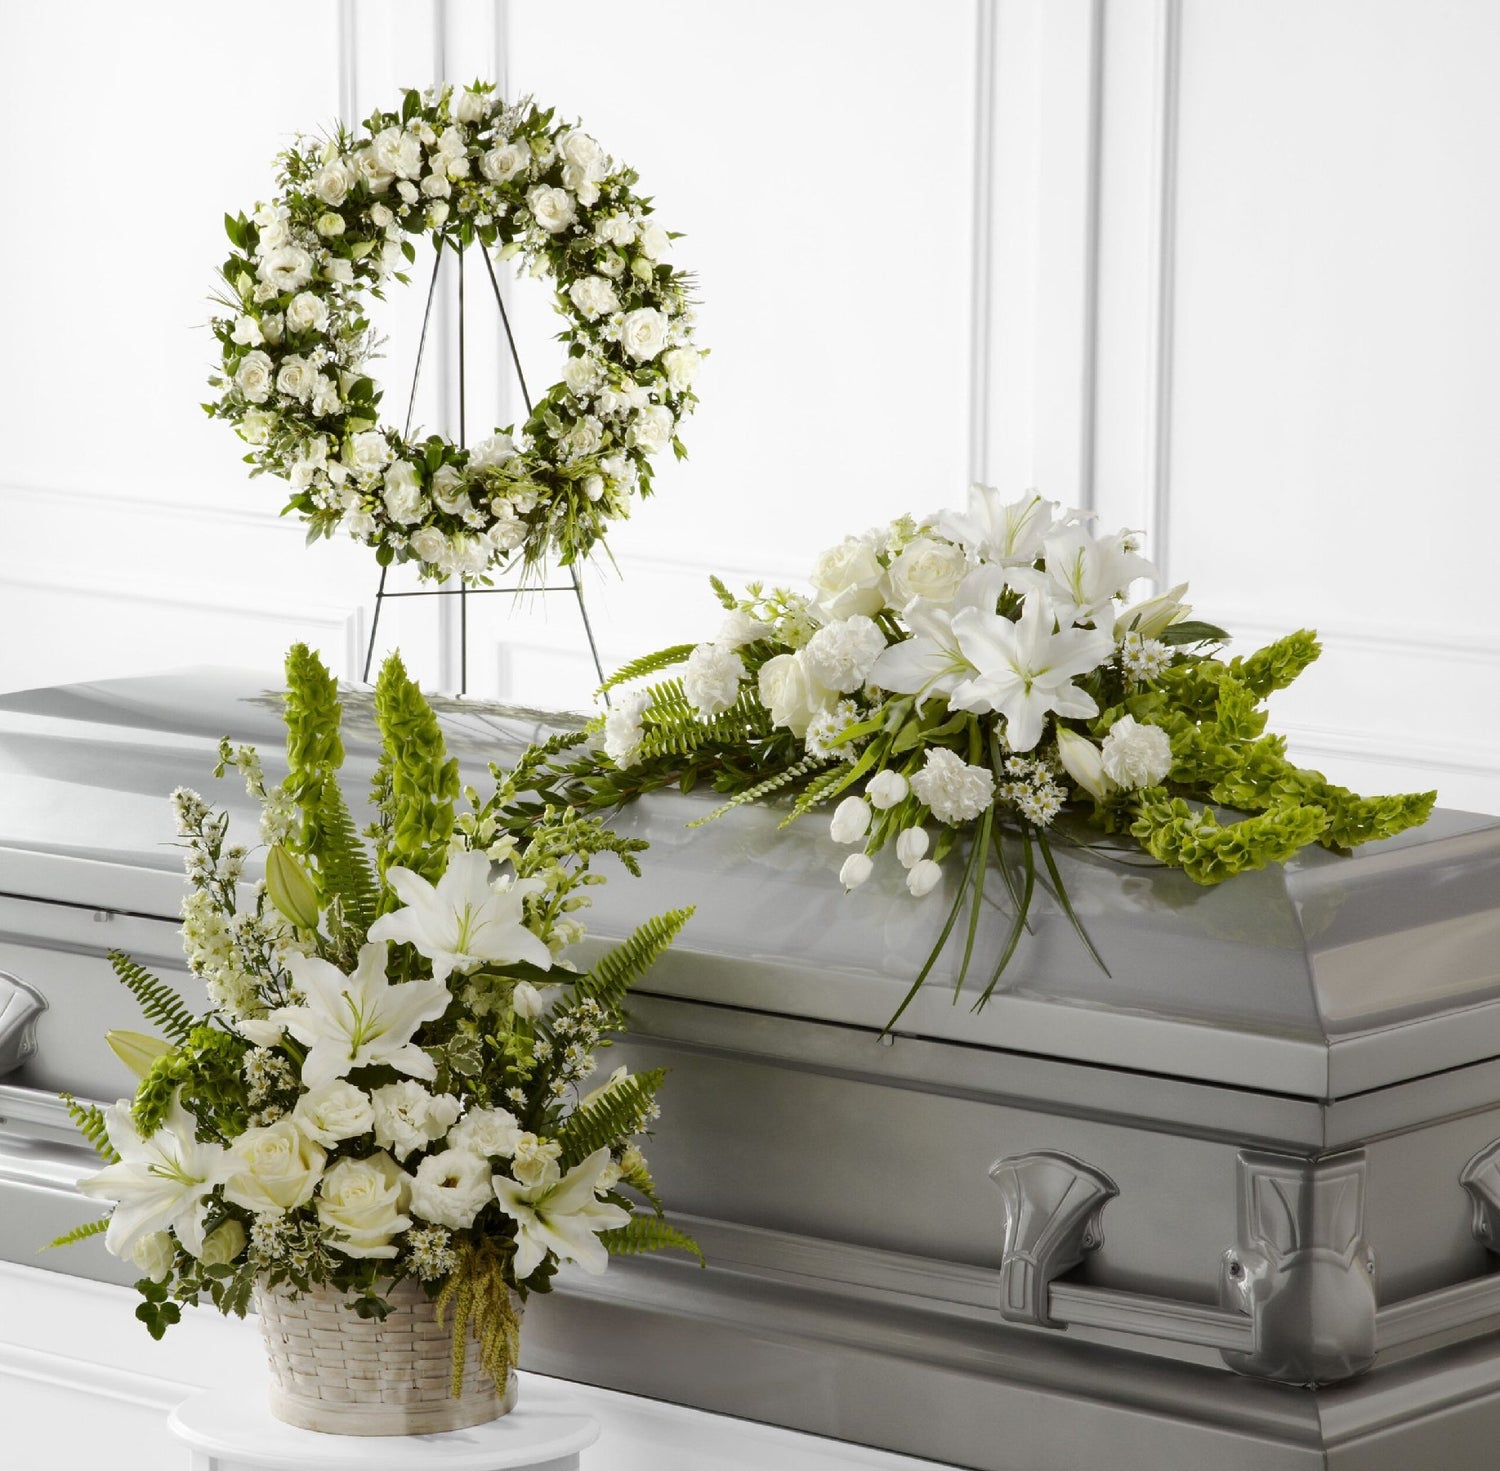 Funeral Vase Arrangements - Flower Delivery NYC